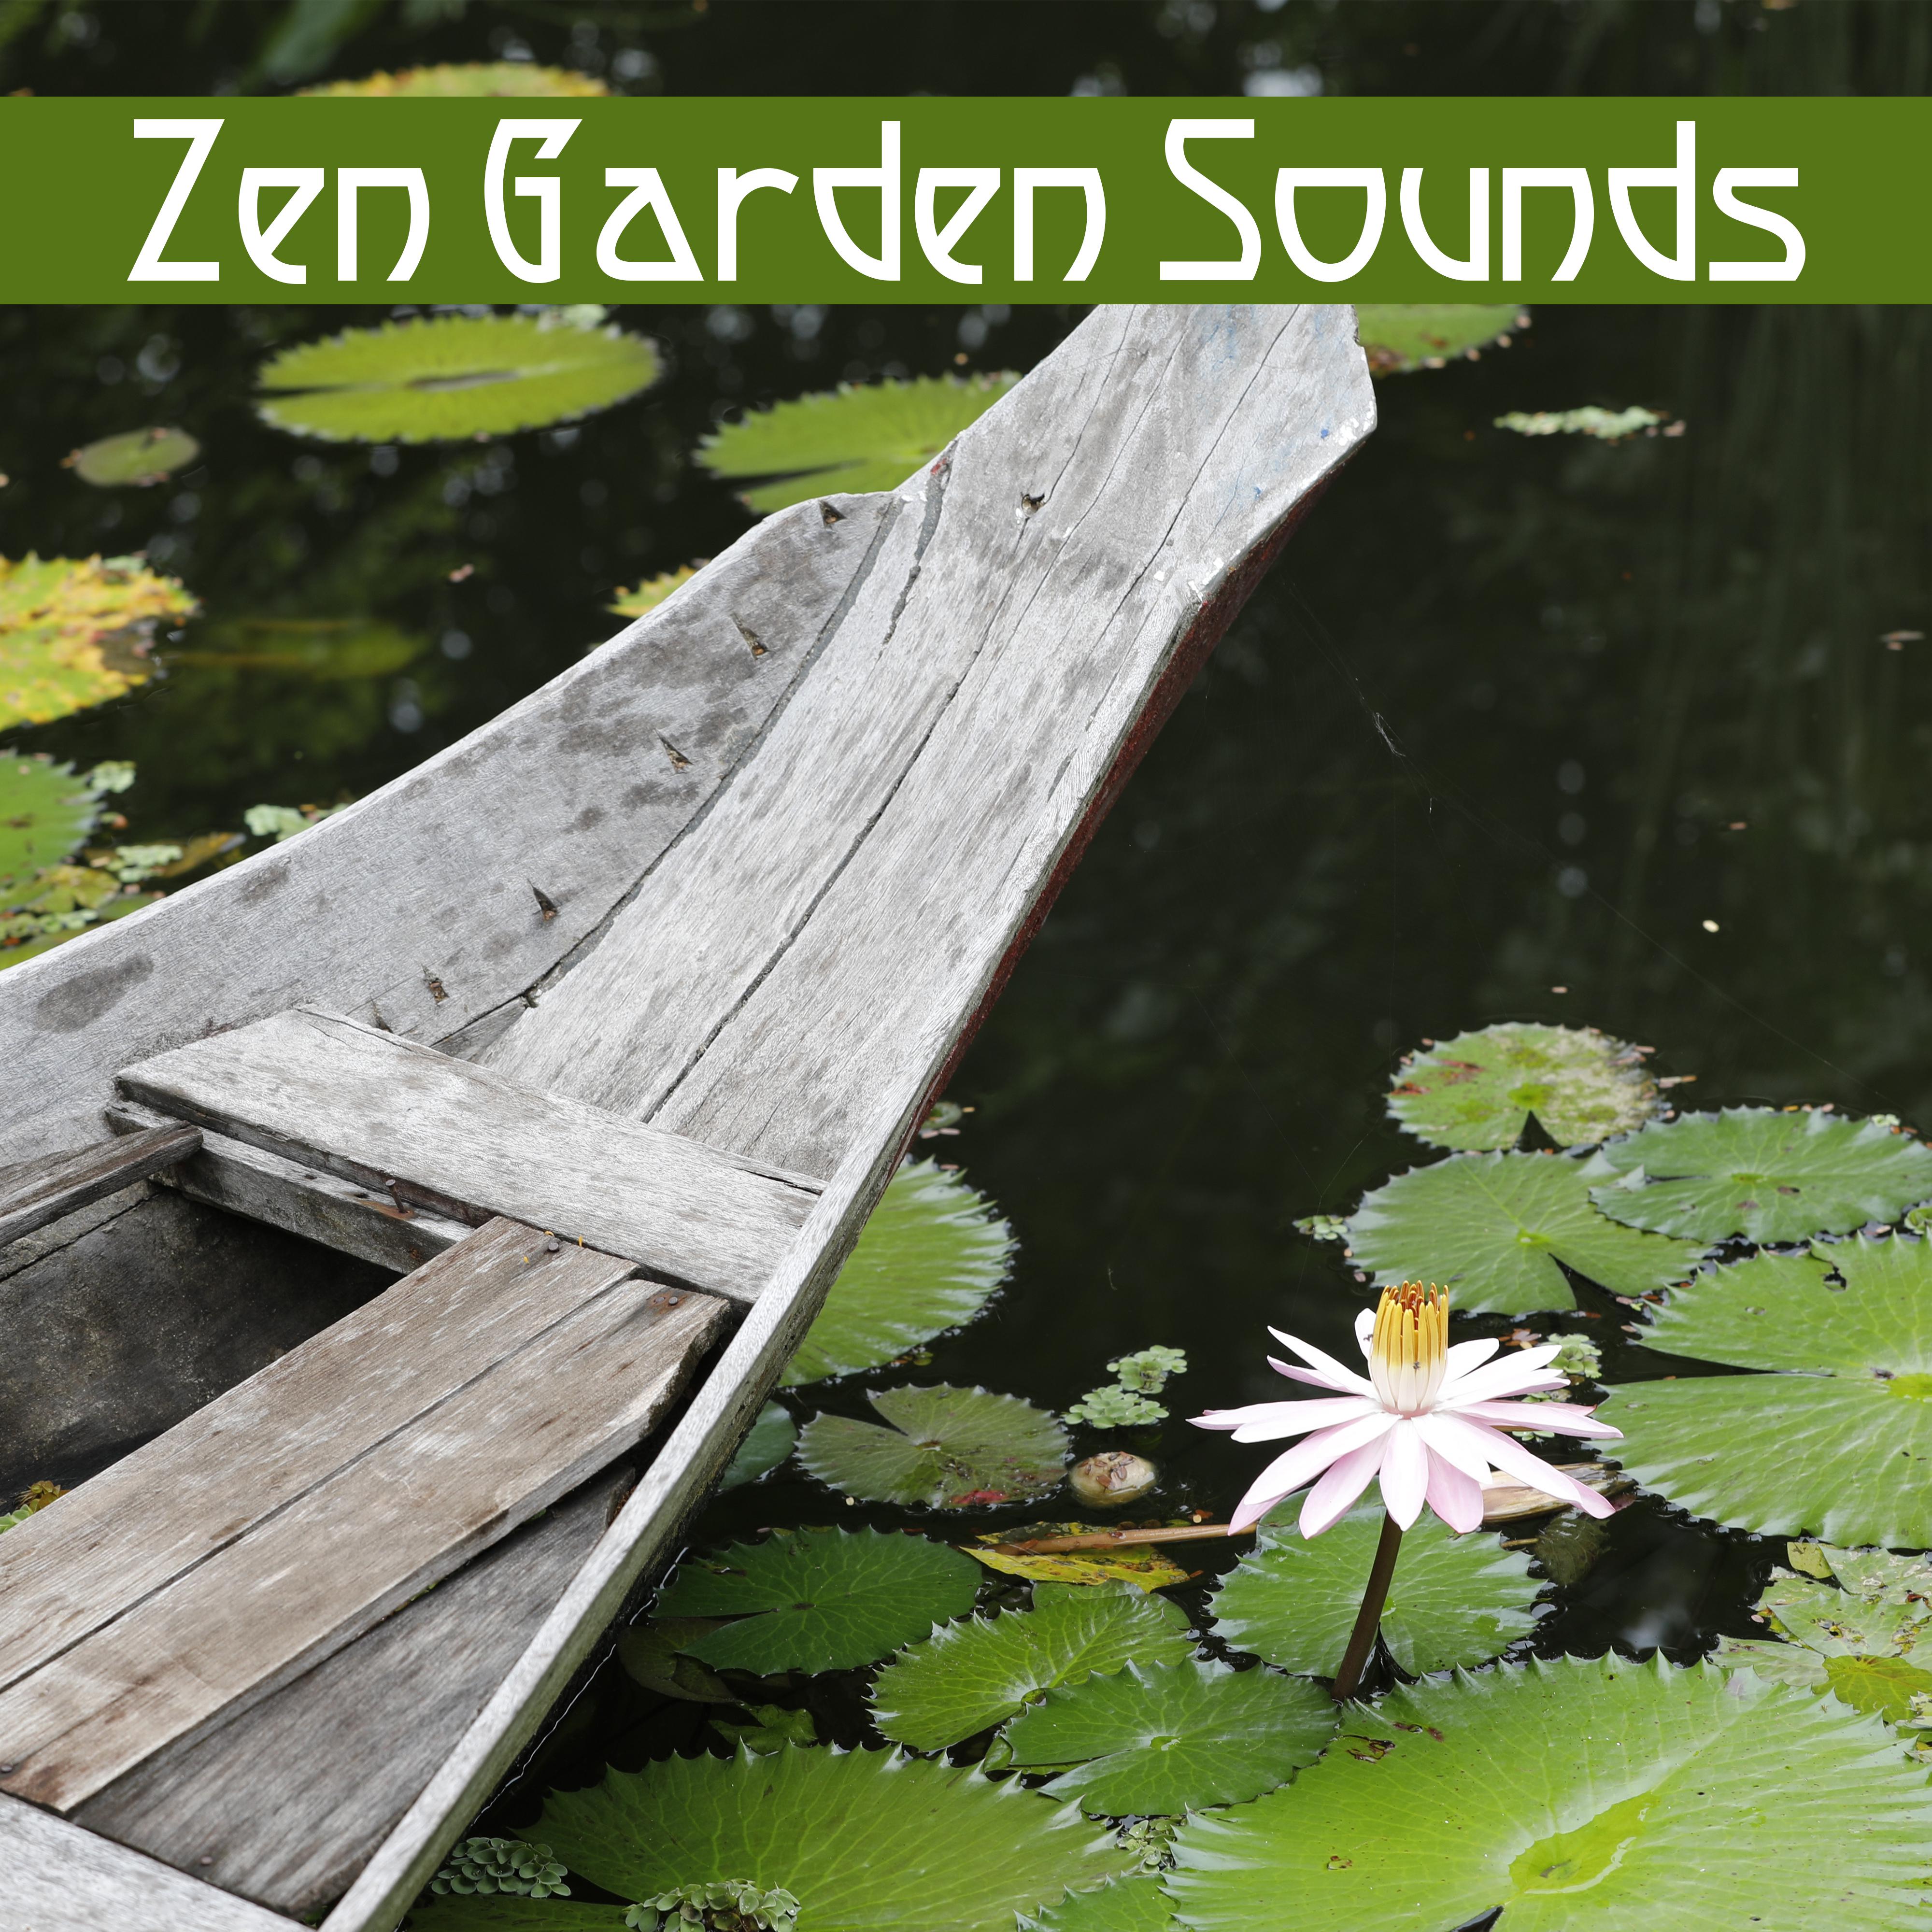 Zen Garden Sounds – Easy Listening, Sounds to Calm Down, Peaceful Music, Waves of Calmness